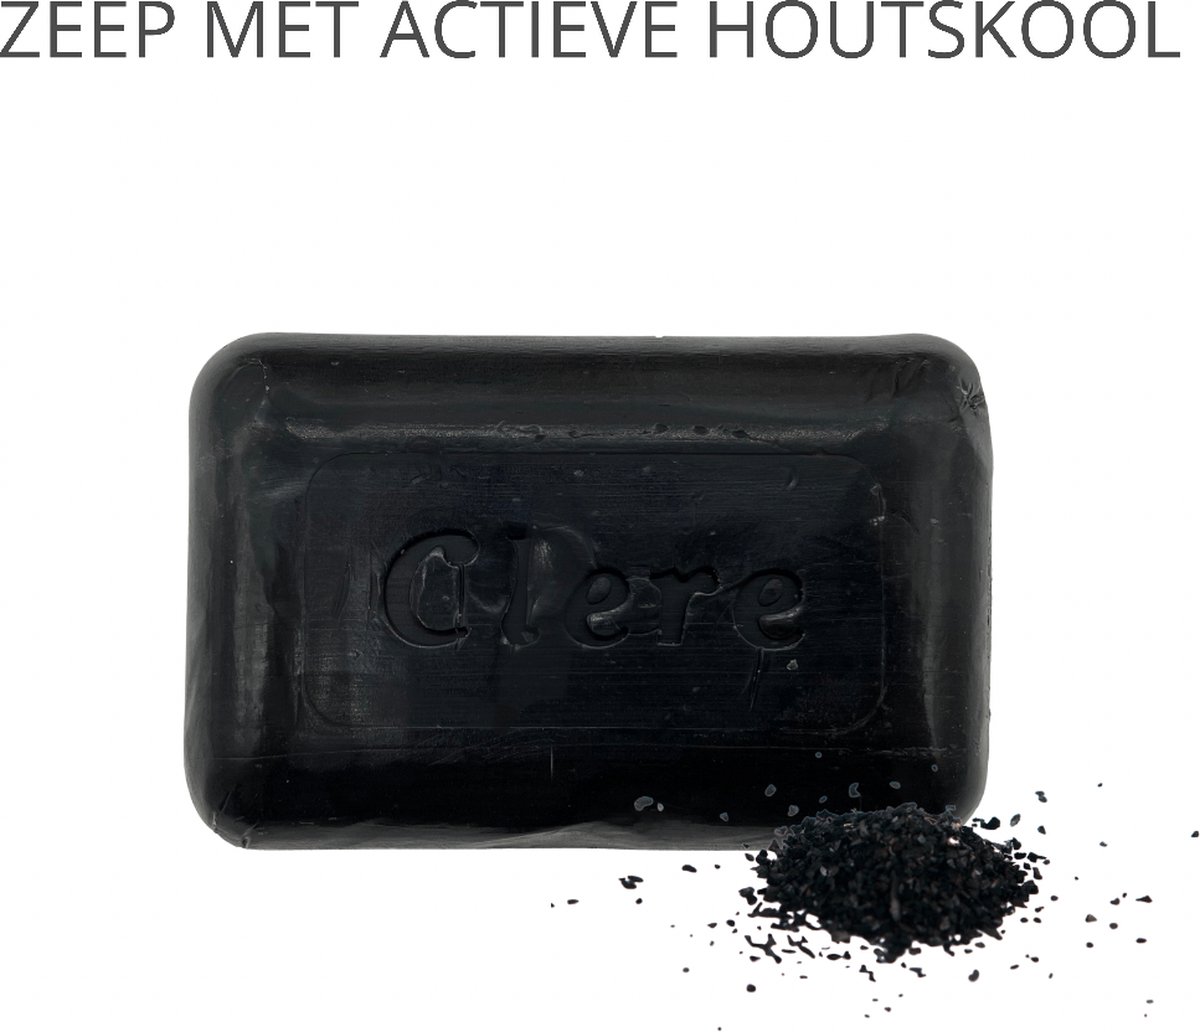 Active Houtskool Zeep - Carbon Active Soap - Savon solide - Karamat Collection